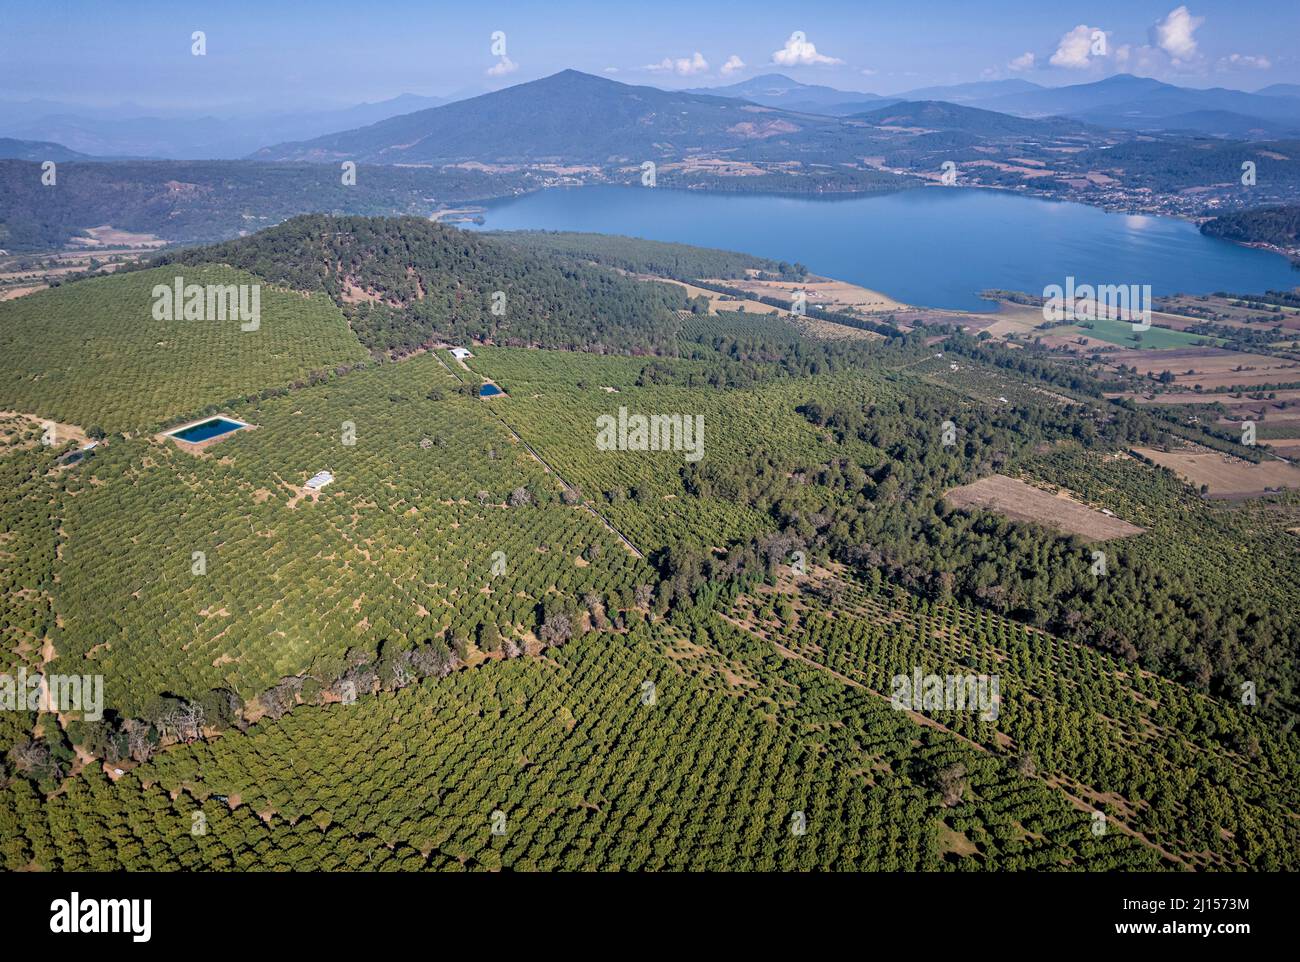 Avocado orchards cover the landscape near Lake Zirahuen, Michoacan, Mexico. Stock Photo